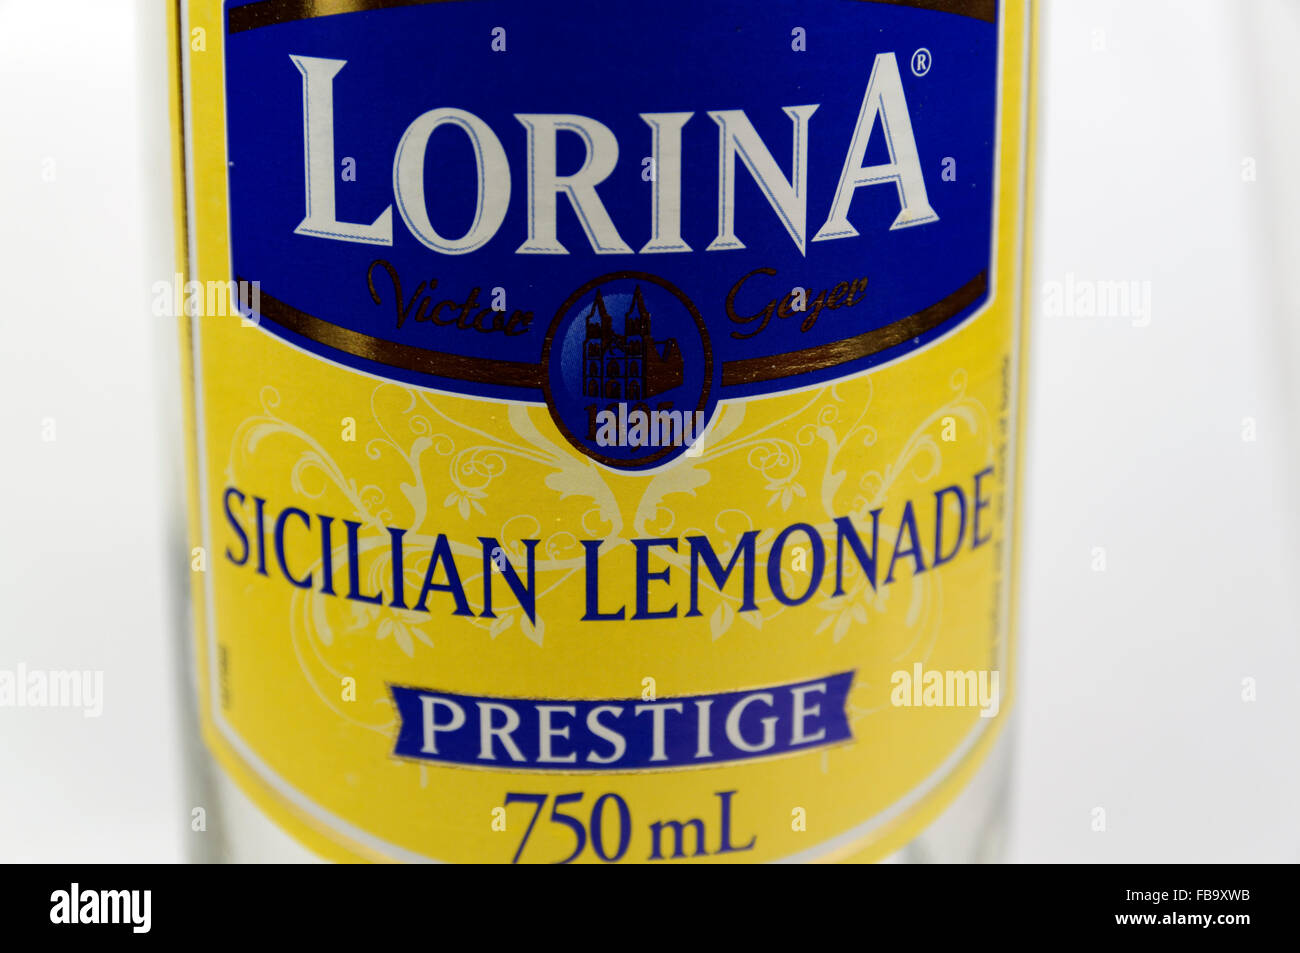 Lorina brand Sicilian Lemonade. Stock Photo